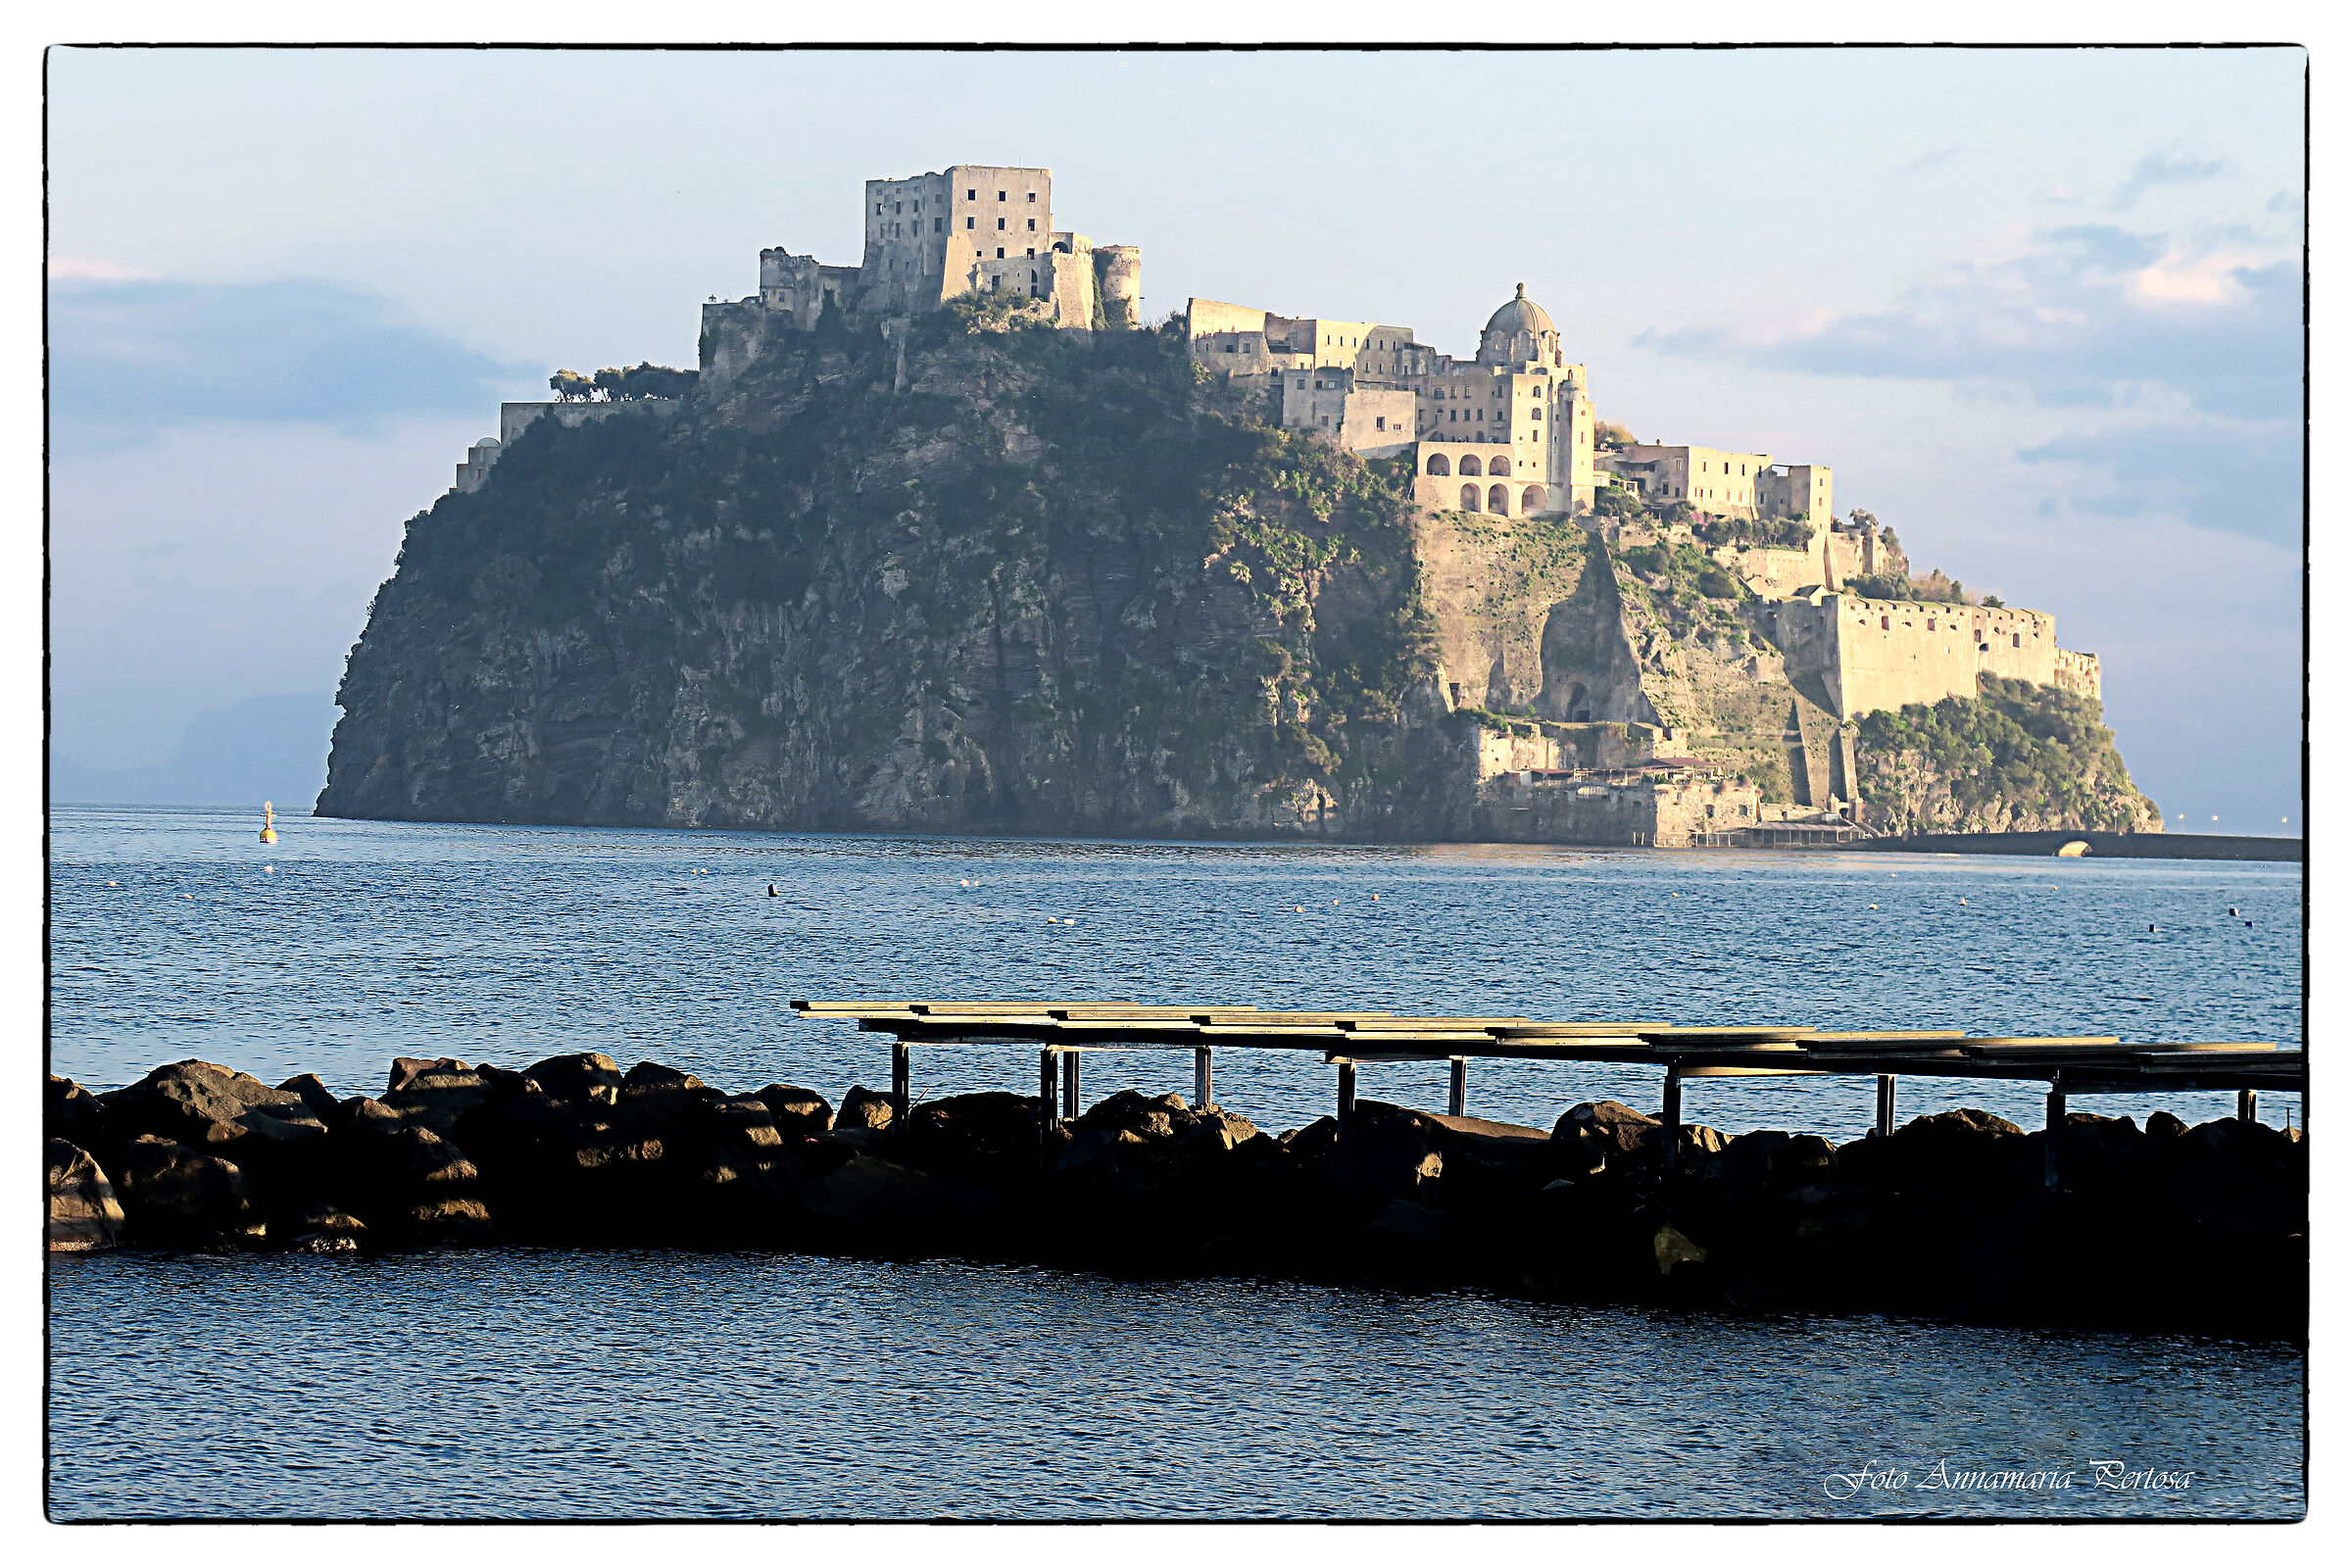 Ischia and its magic...